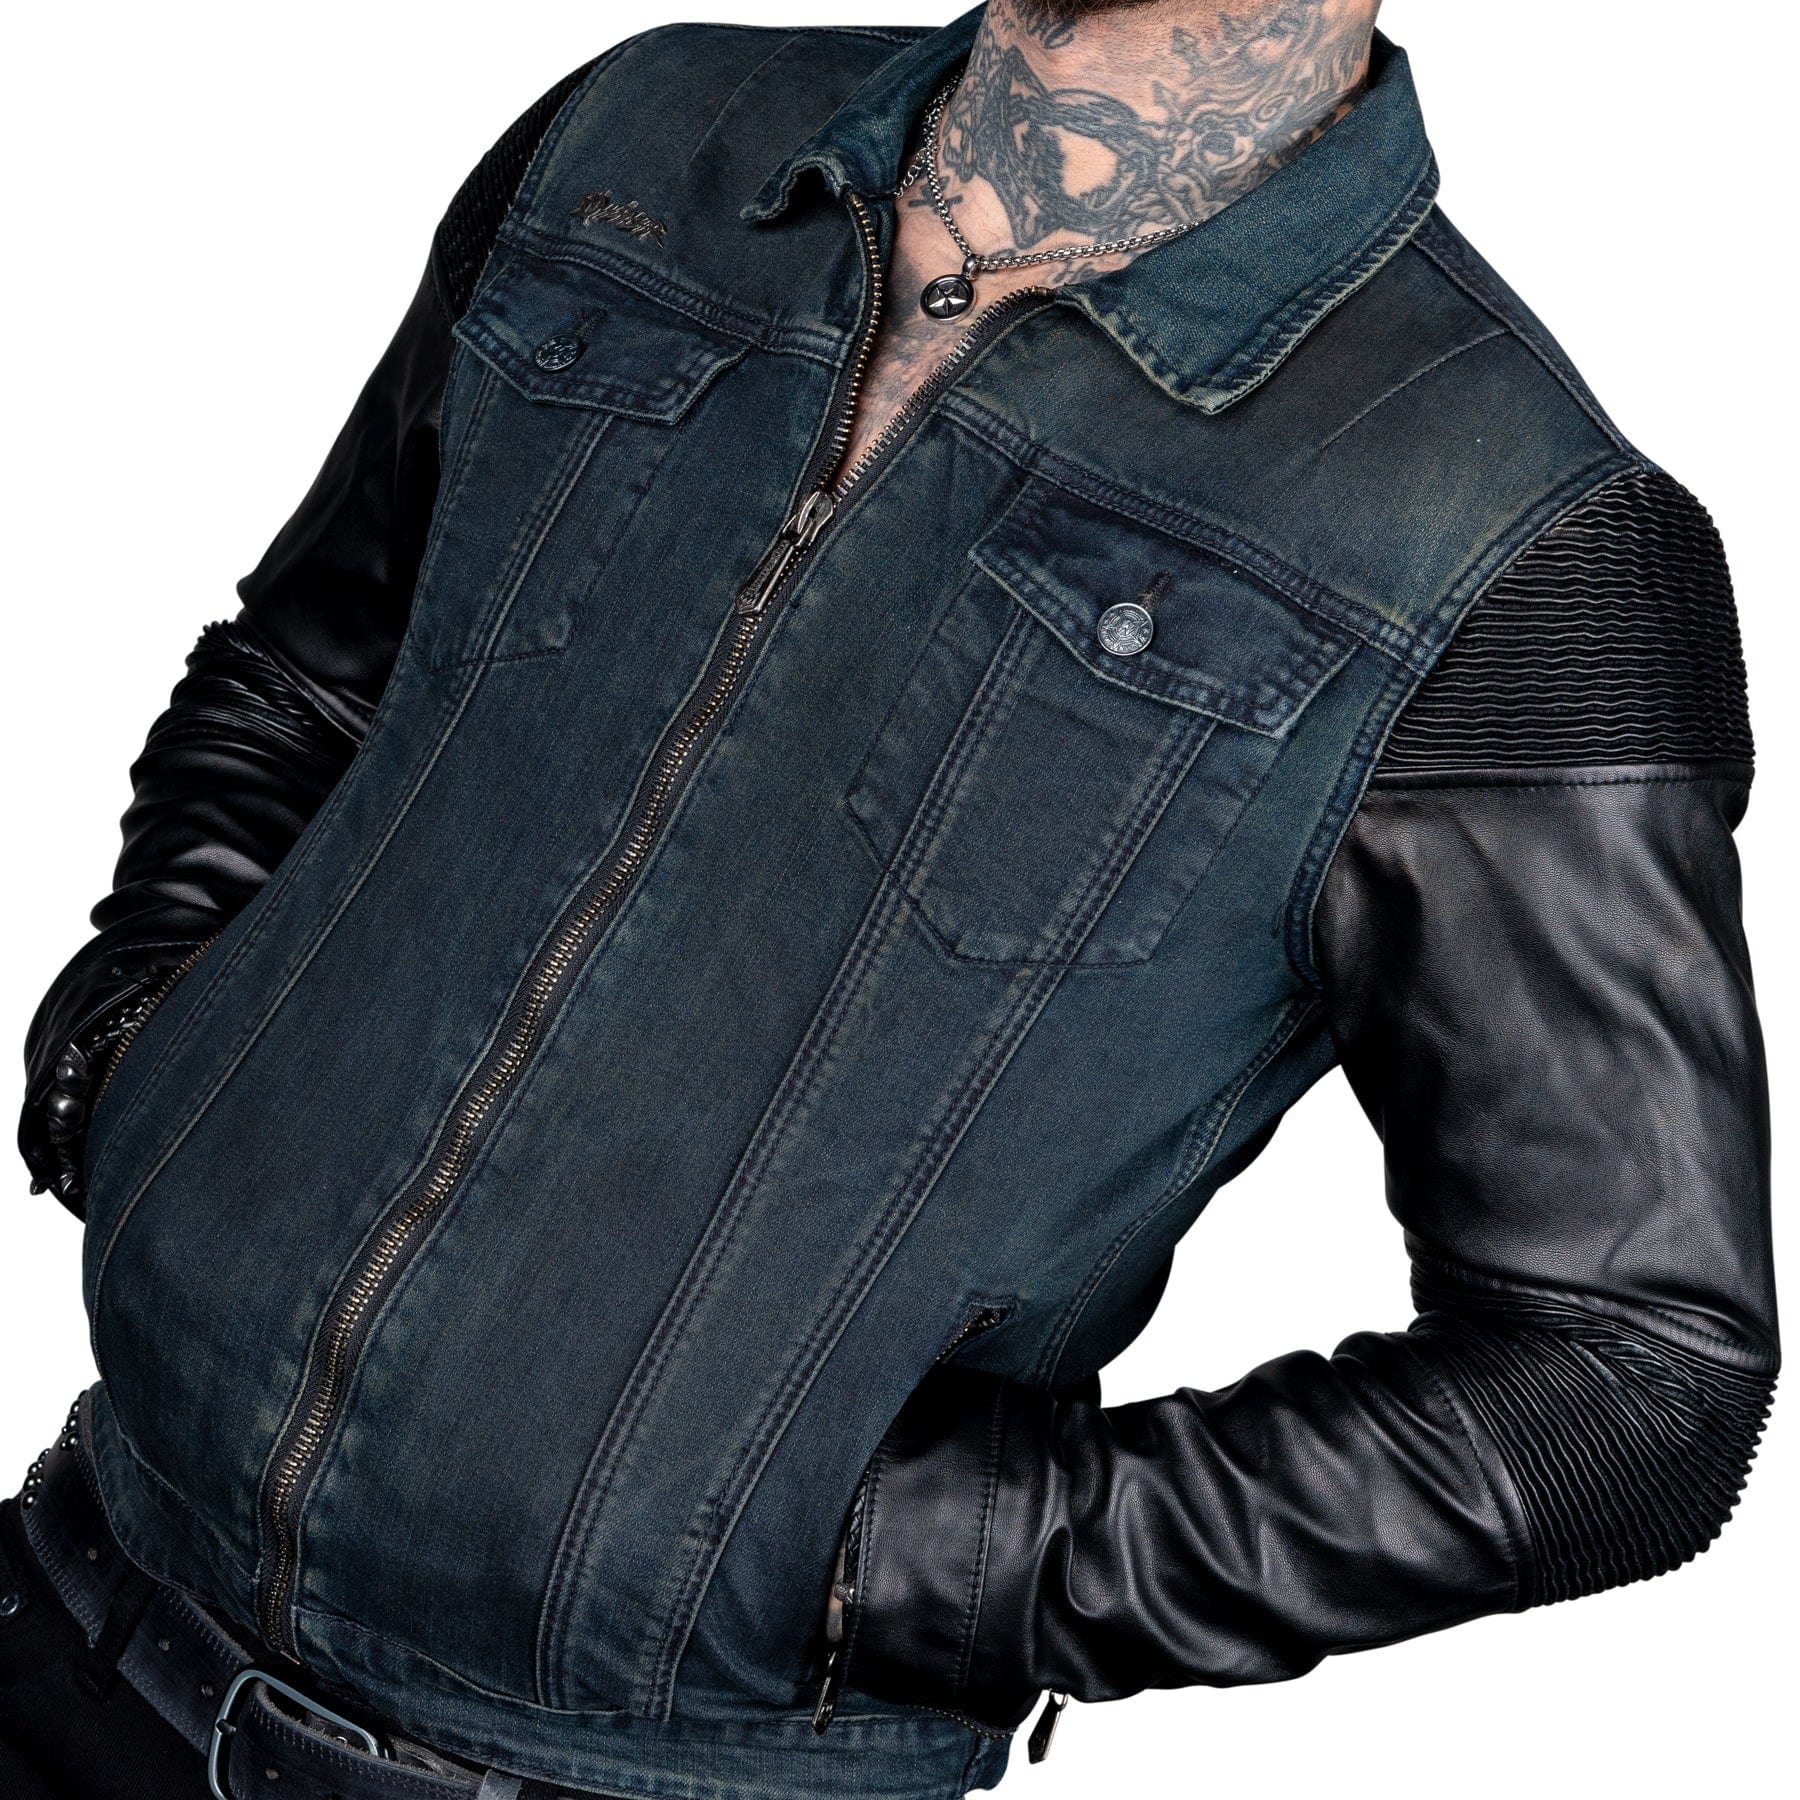 Wornstar Clothing Mens Jacket. Nightcrawler Denim Jacket - Midnight Blue and Black